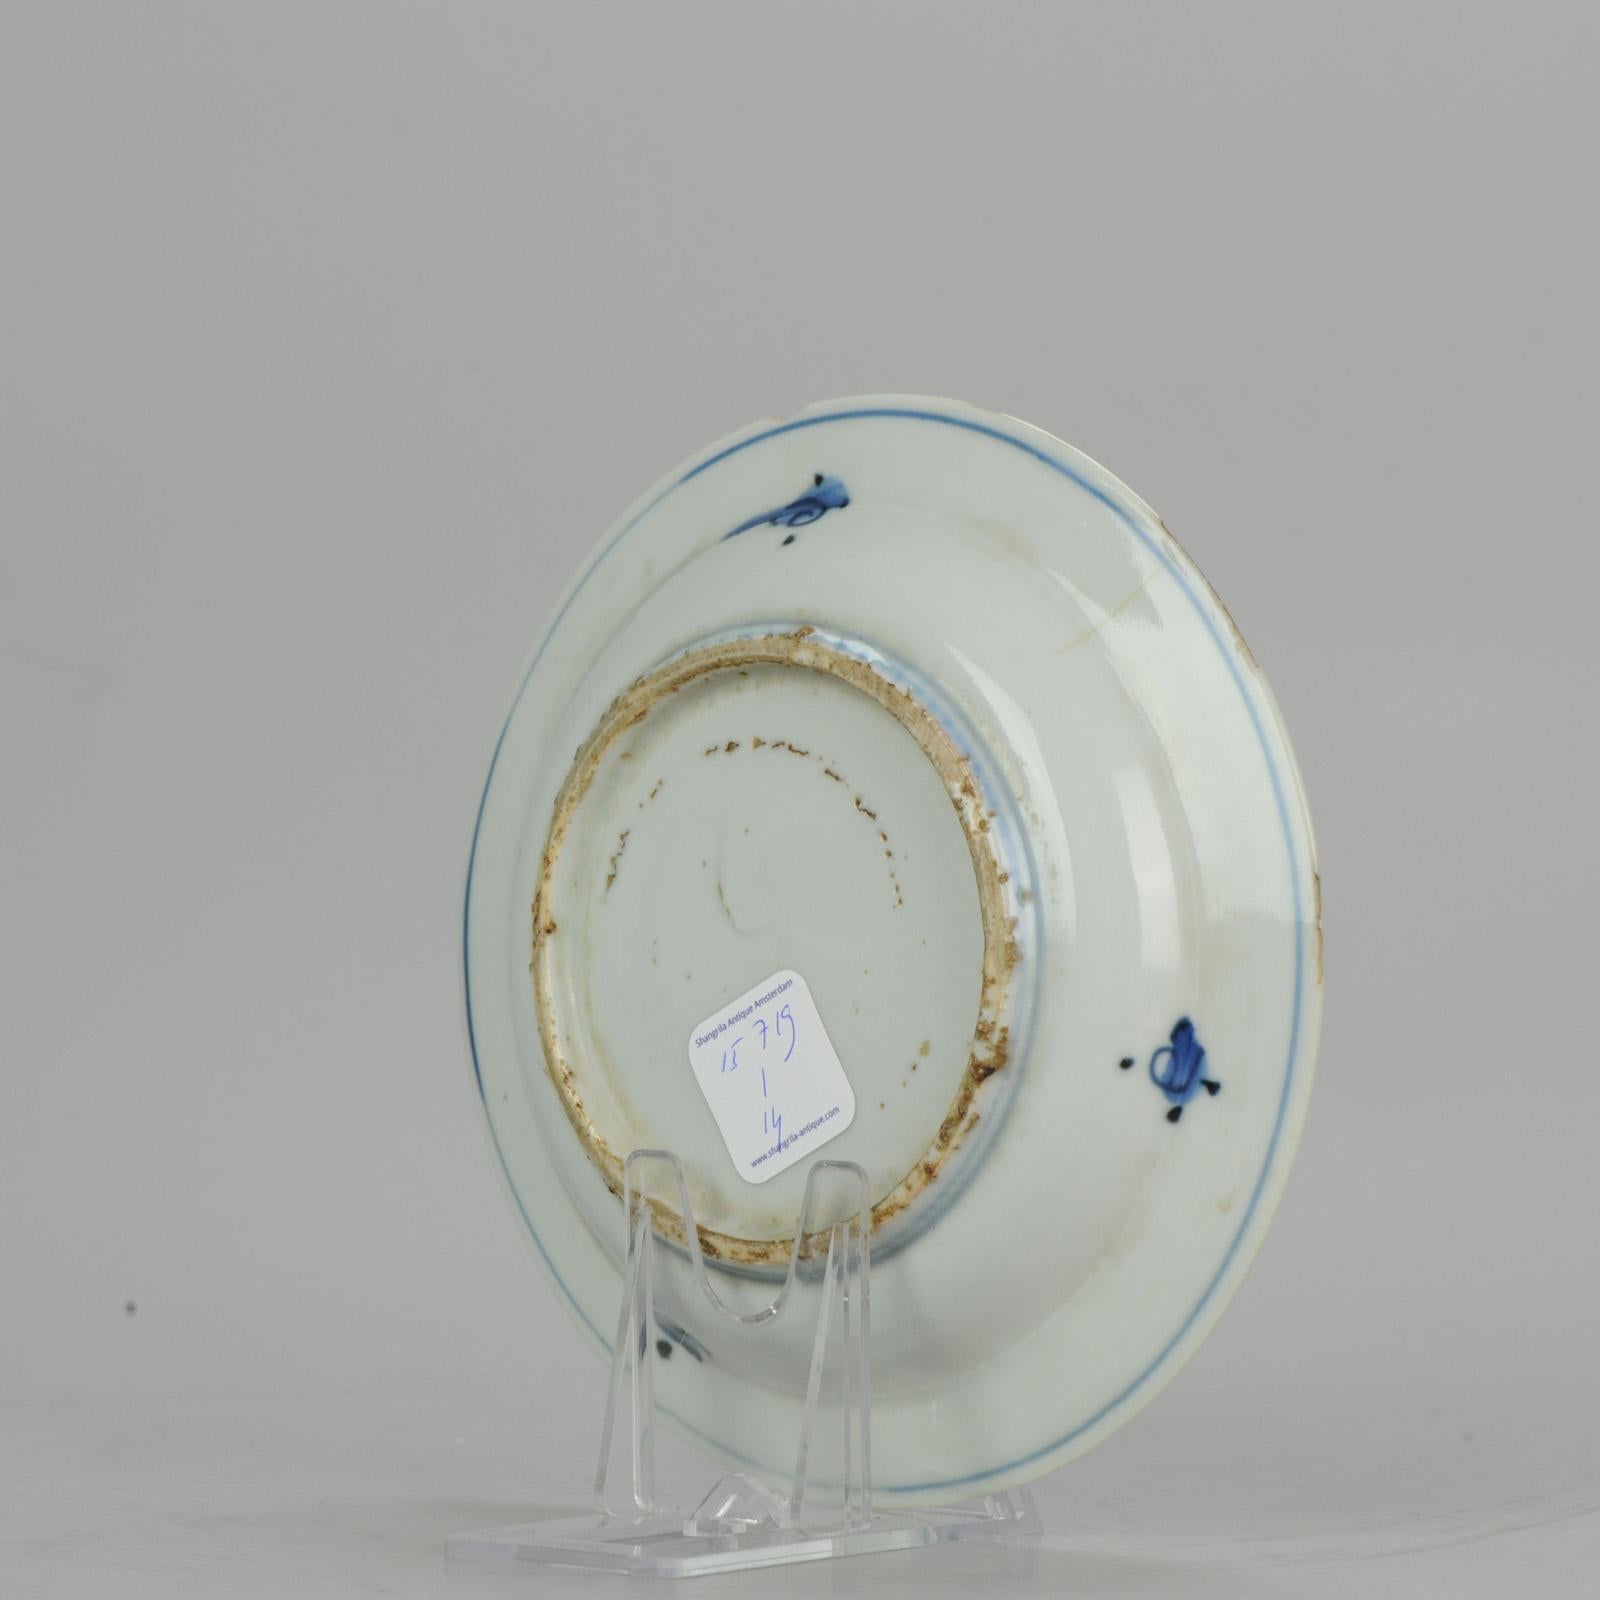 Chinese Porcelain Plate 17th Century Lotus Fishing Ming Dynasty Tianqi/Chongzhen 1